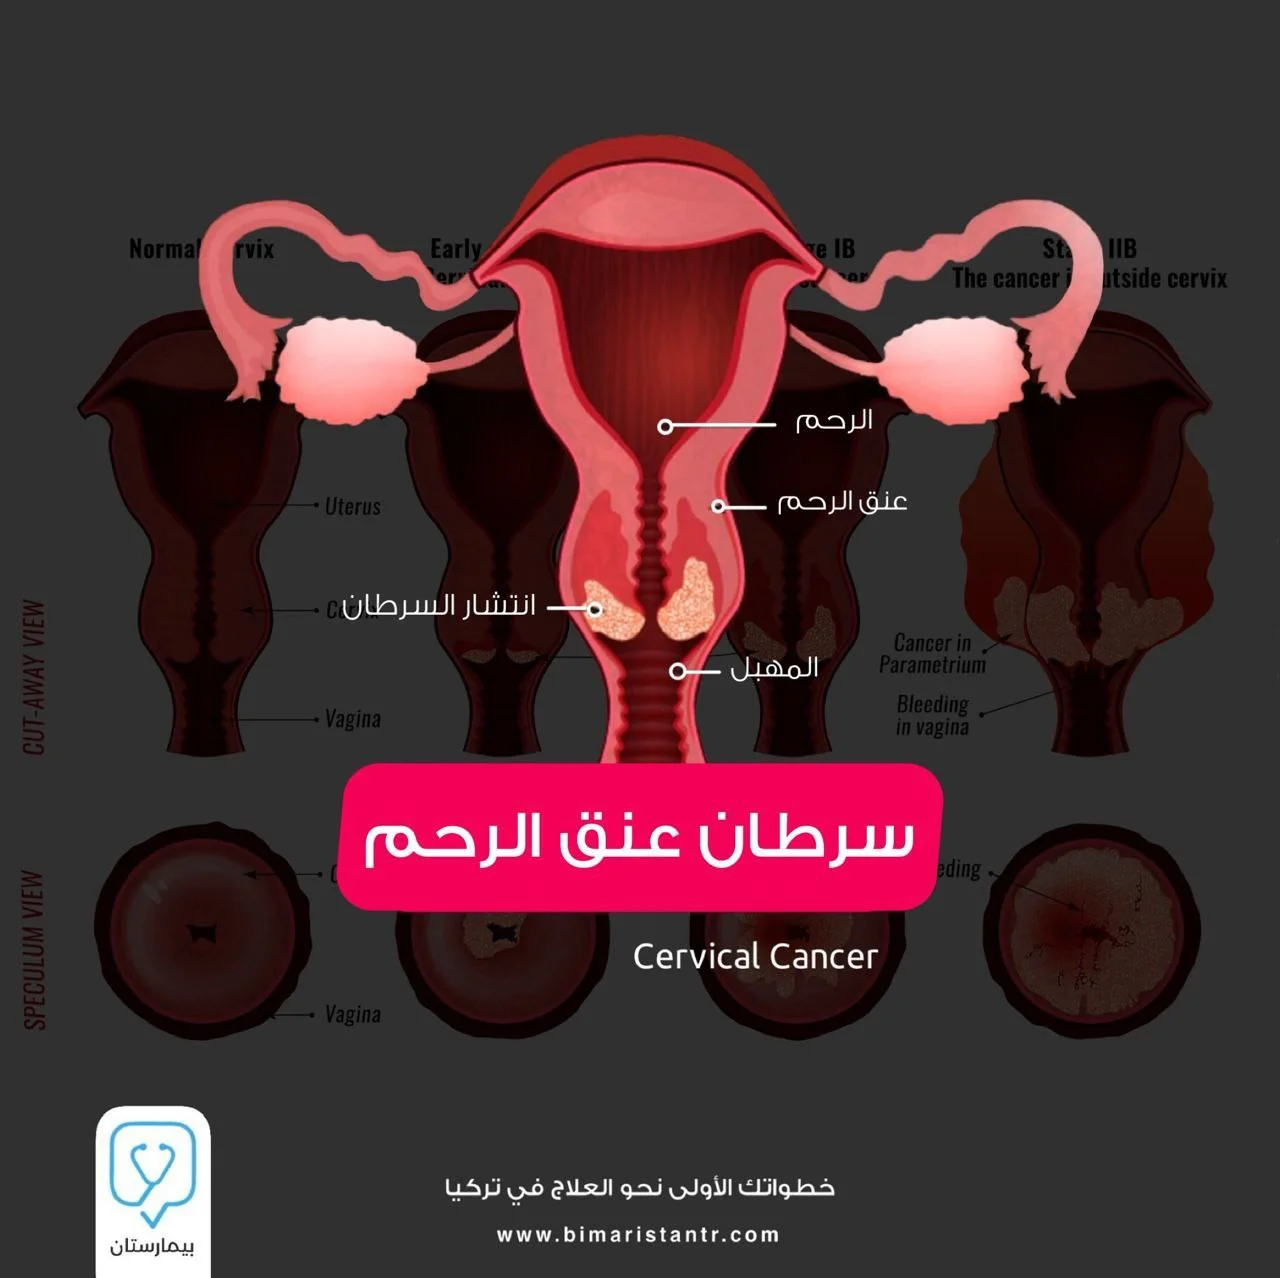 Cervical-uterine-cancer-symptoms-causes-prevention-and-treatment